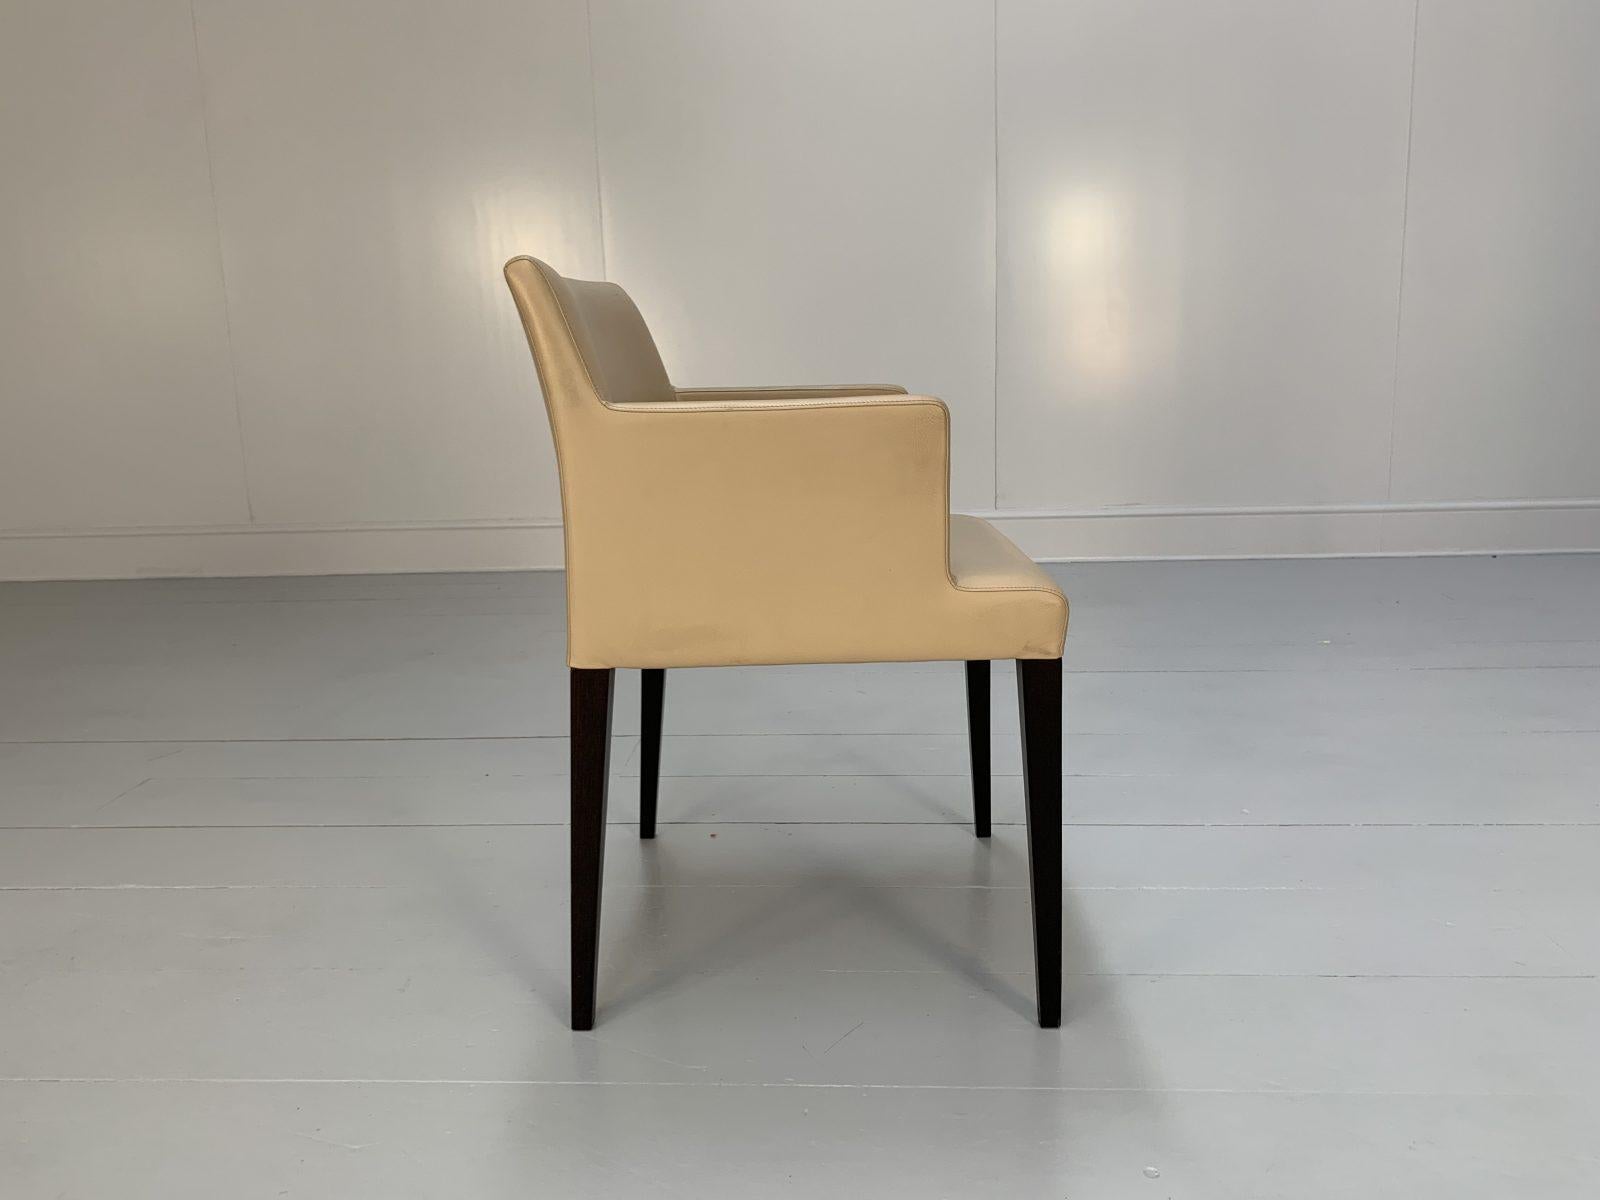 Suite of 6 Poltrona Frau “Liz B” Dining Chairs – In Brown “Pelle Frau” Leather 3